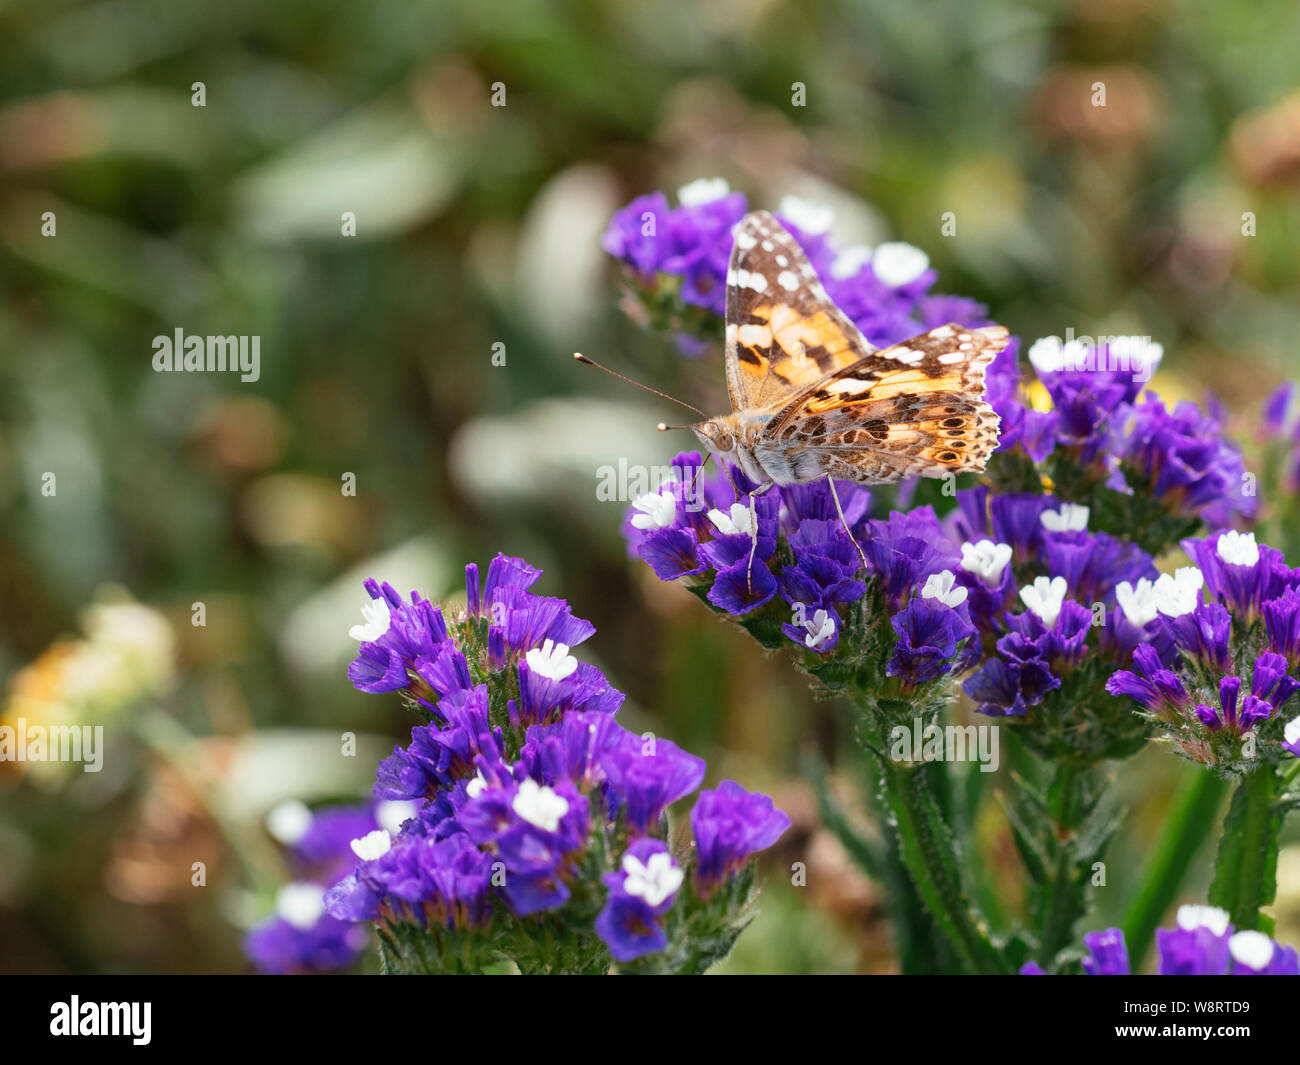 Painted lady butterfly feeding on Limonium sinatum flowers. Stock Photo